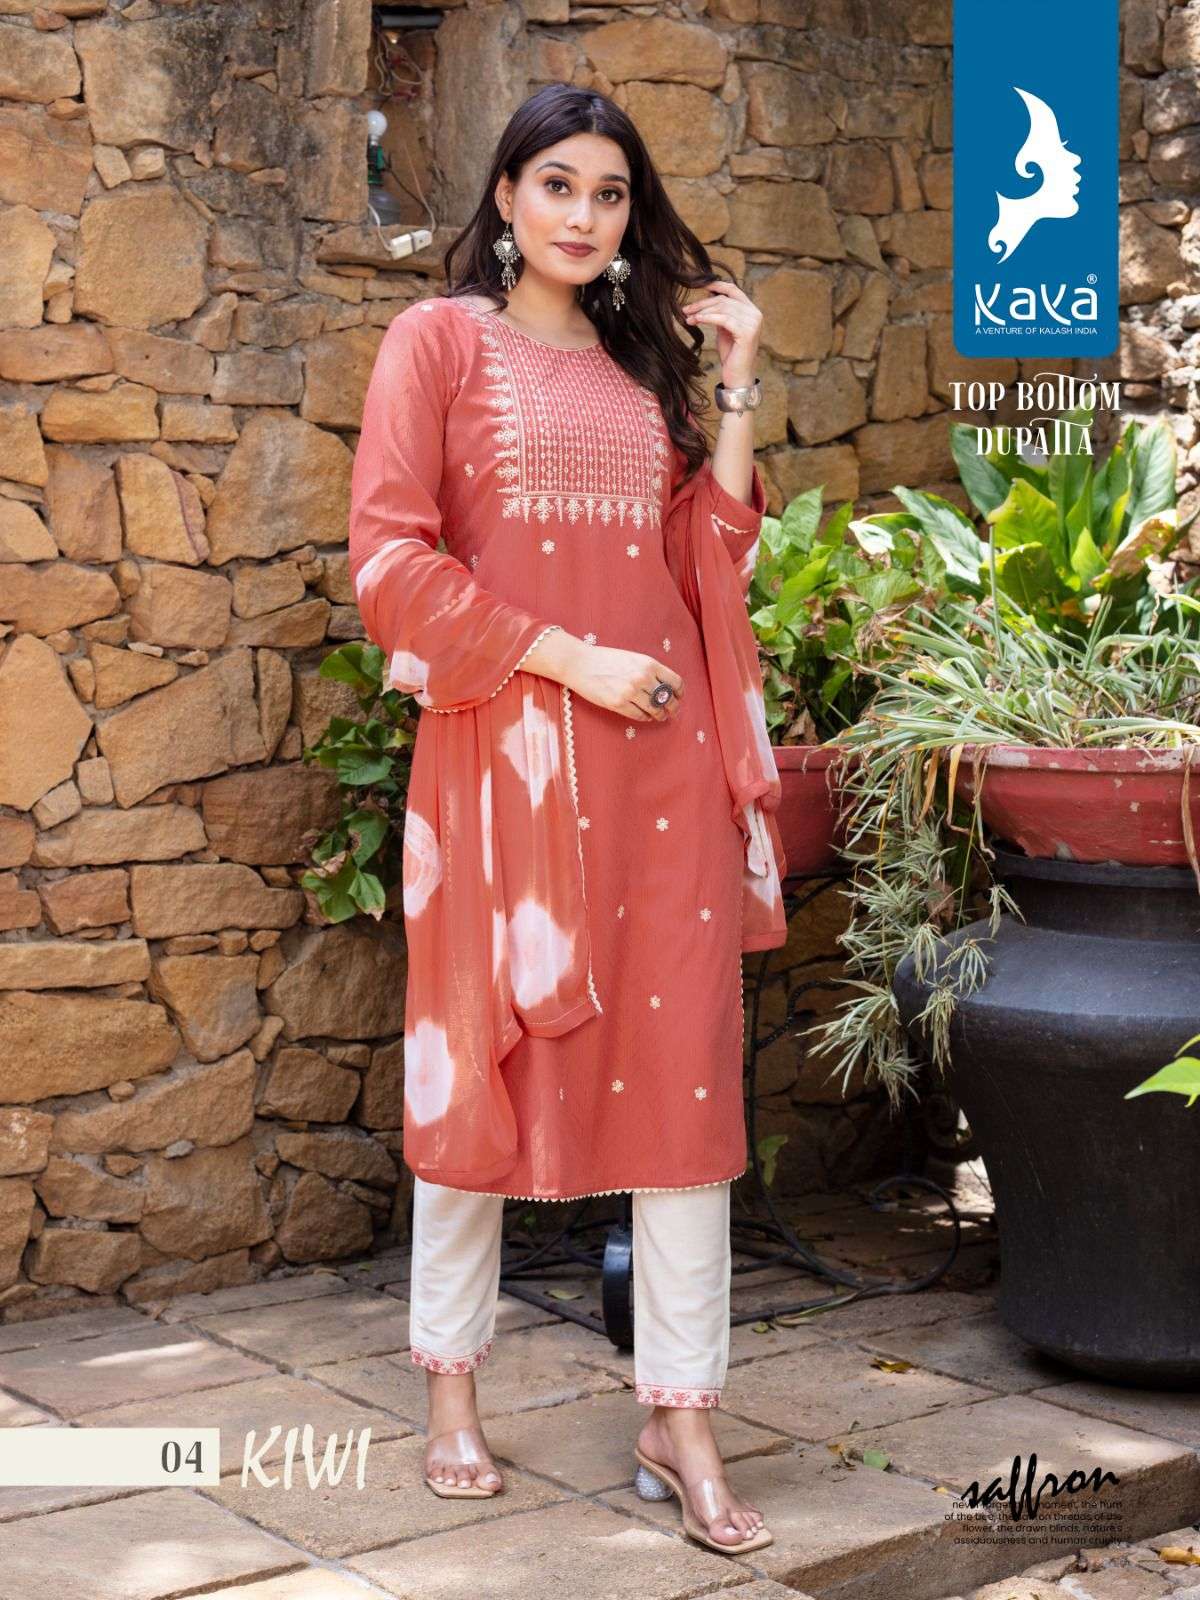 BOONDI 2 by kaya kurtis latest online catalogs sellers in india - Reewaz  International | Wholesaler & Exporter of indian ethnic wear catalogs.